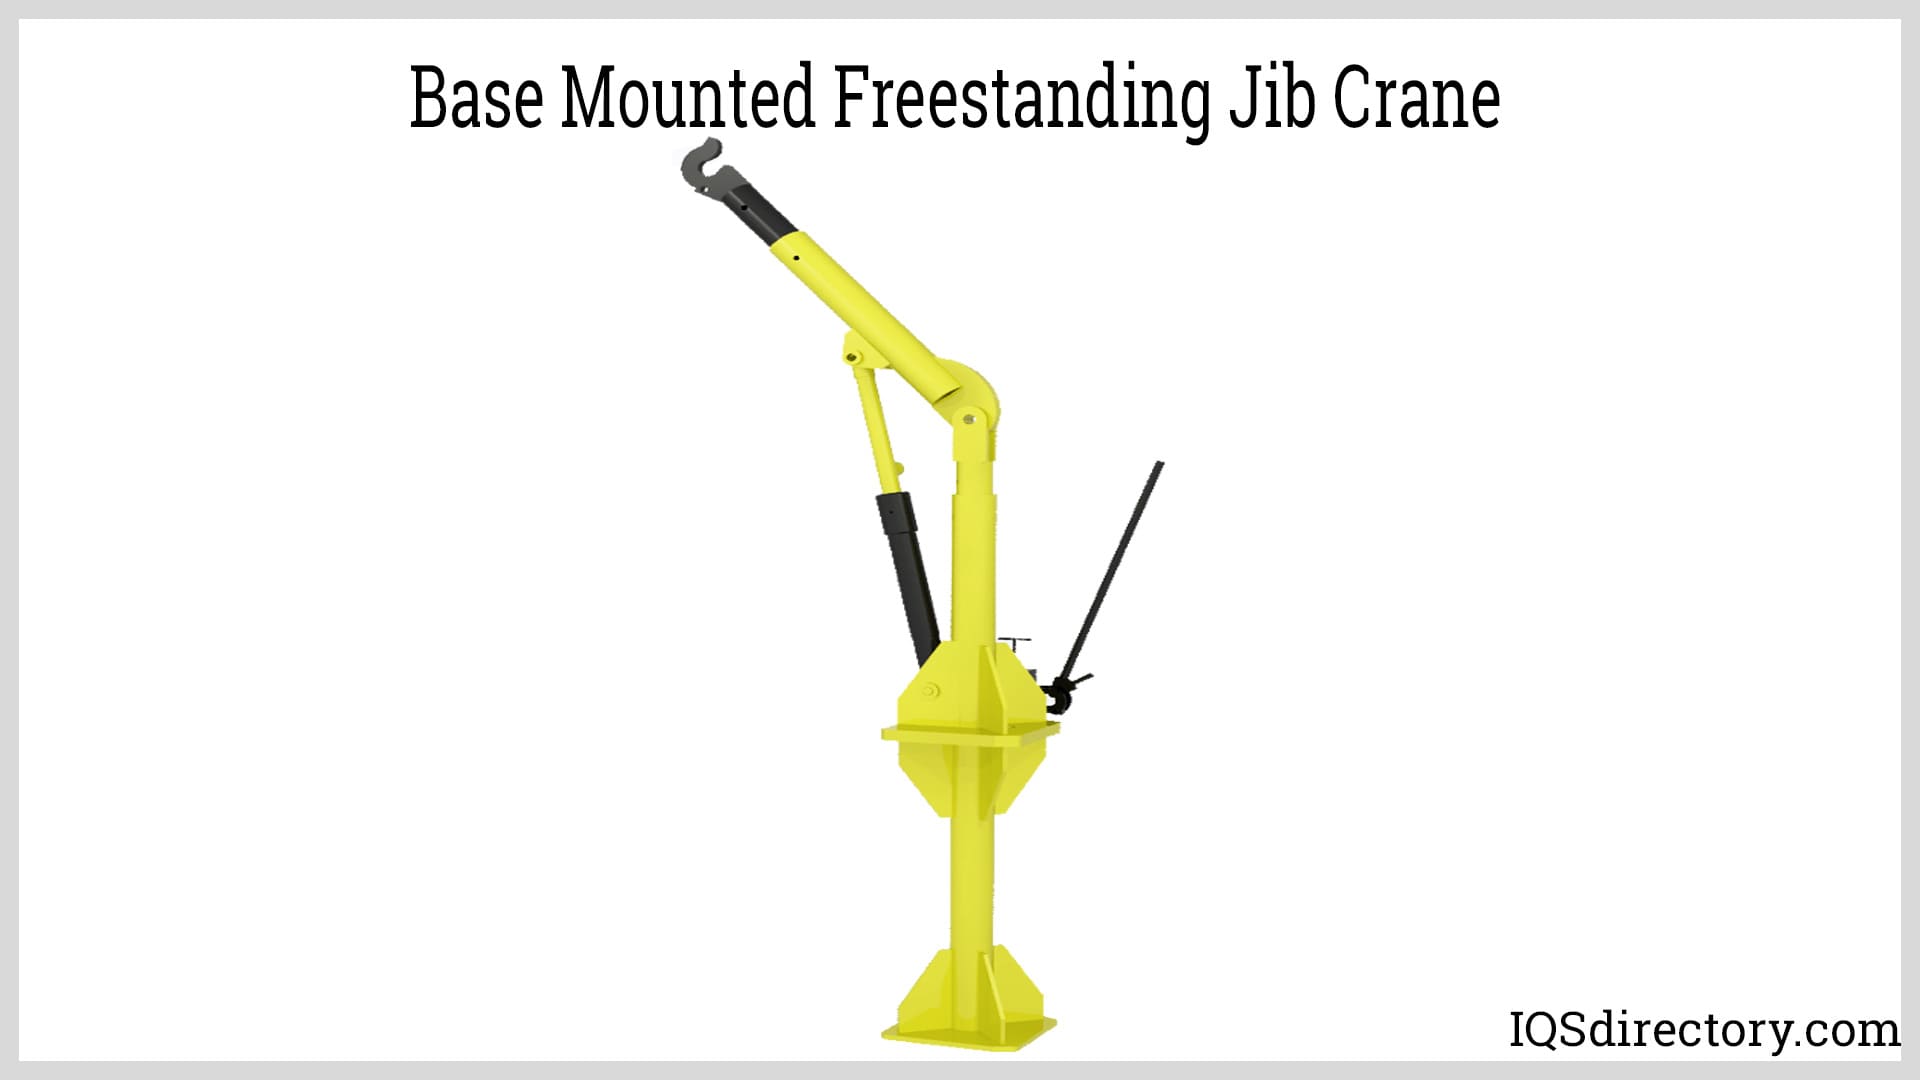 Base Mounted Freestanding Jib Crane